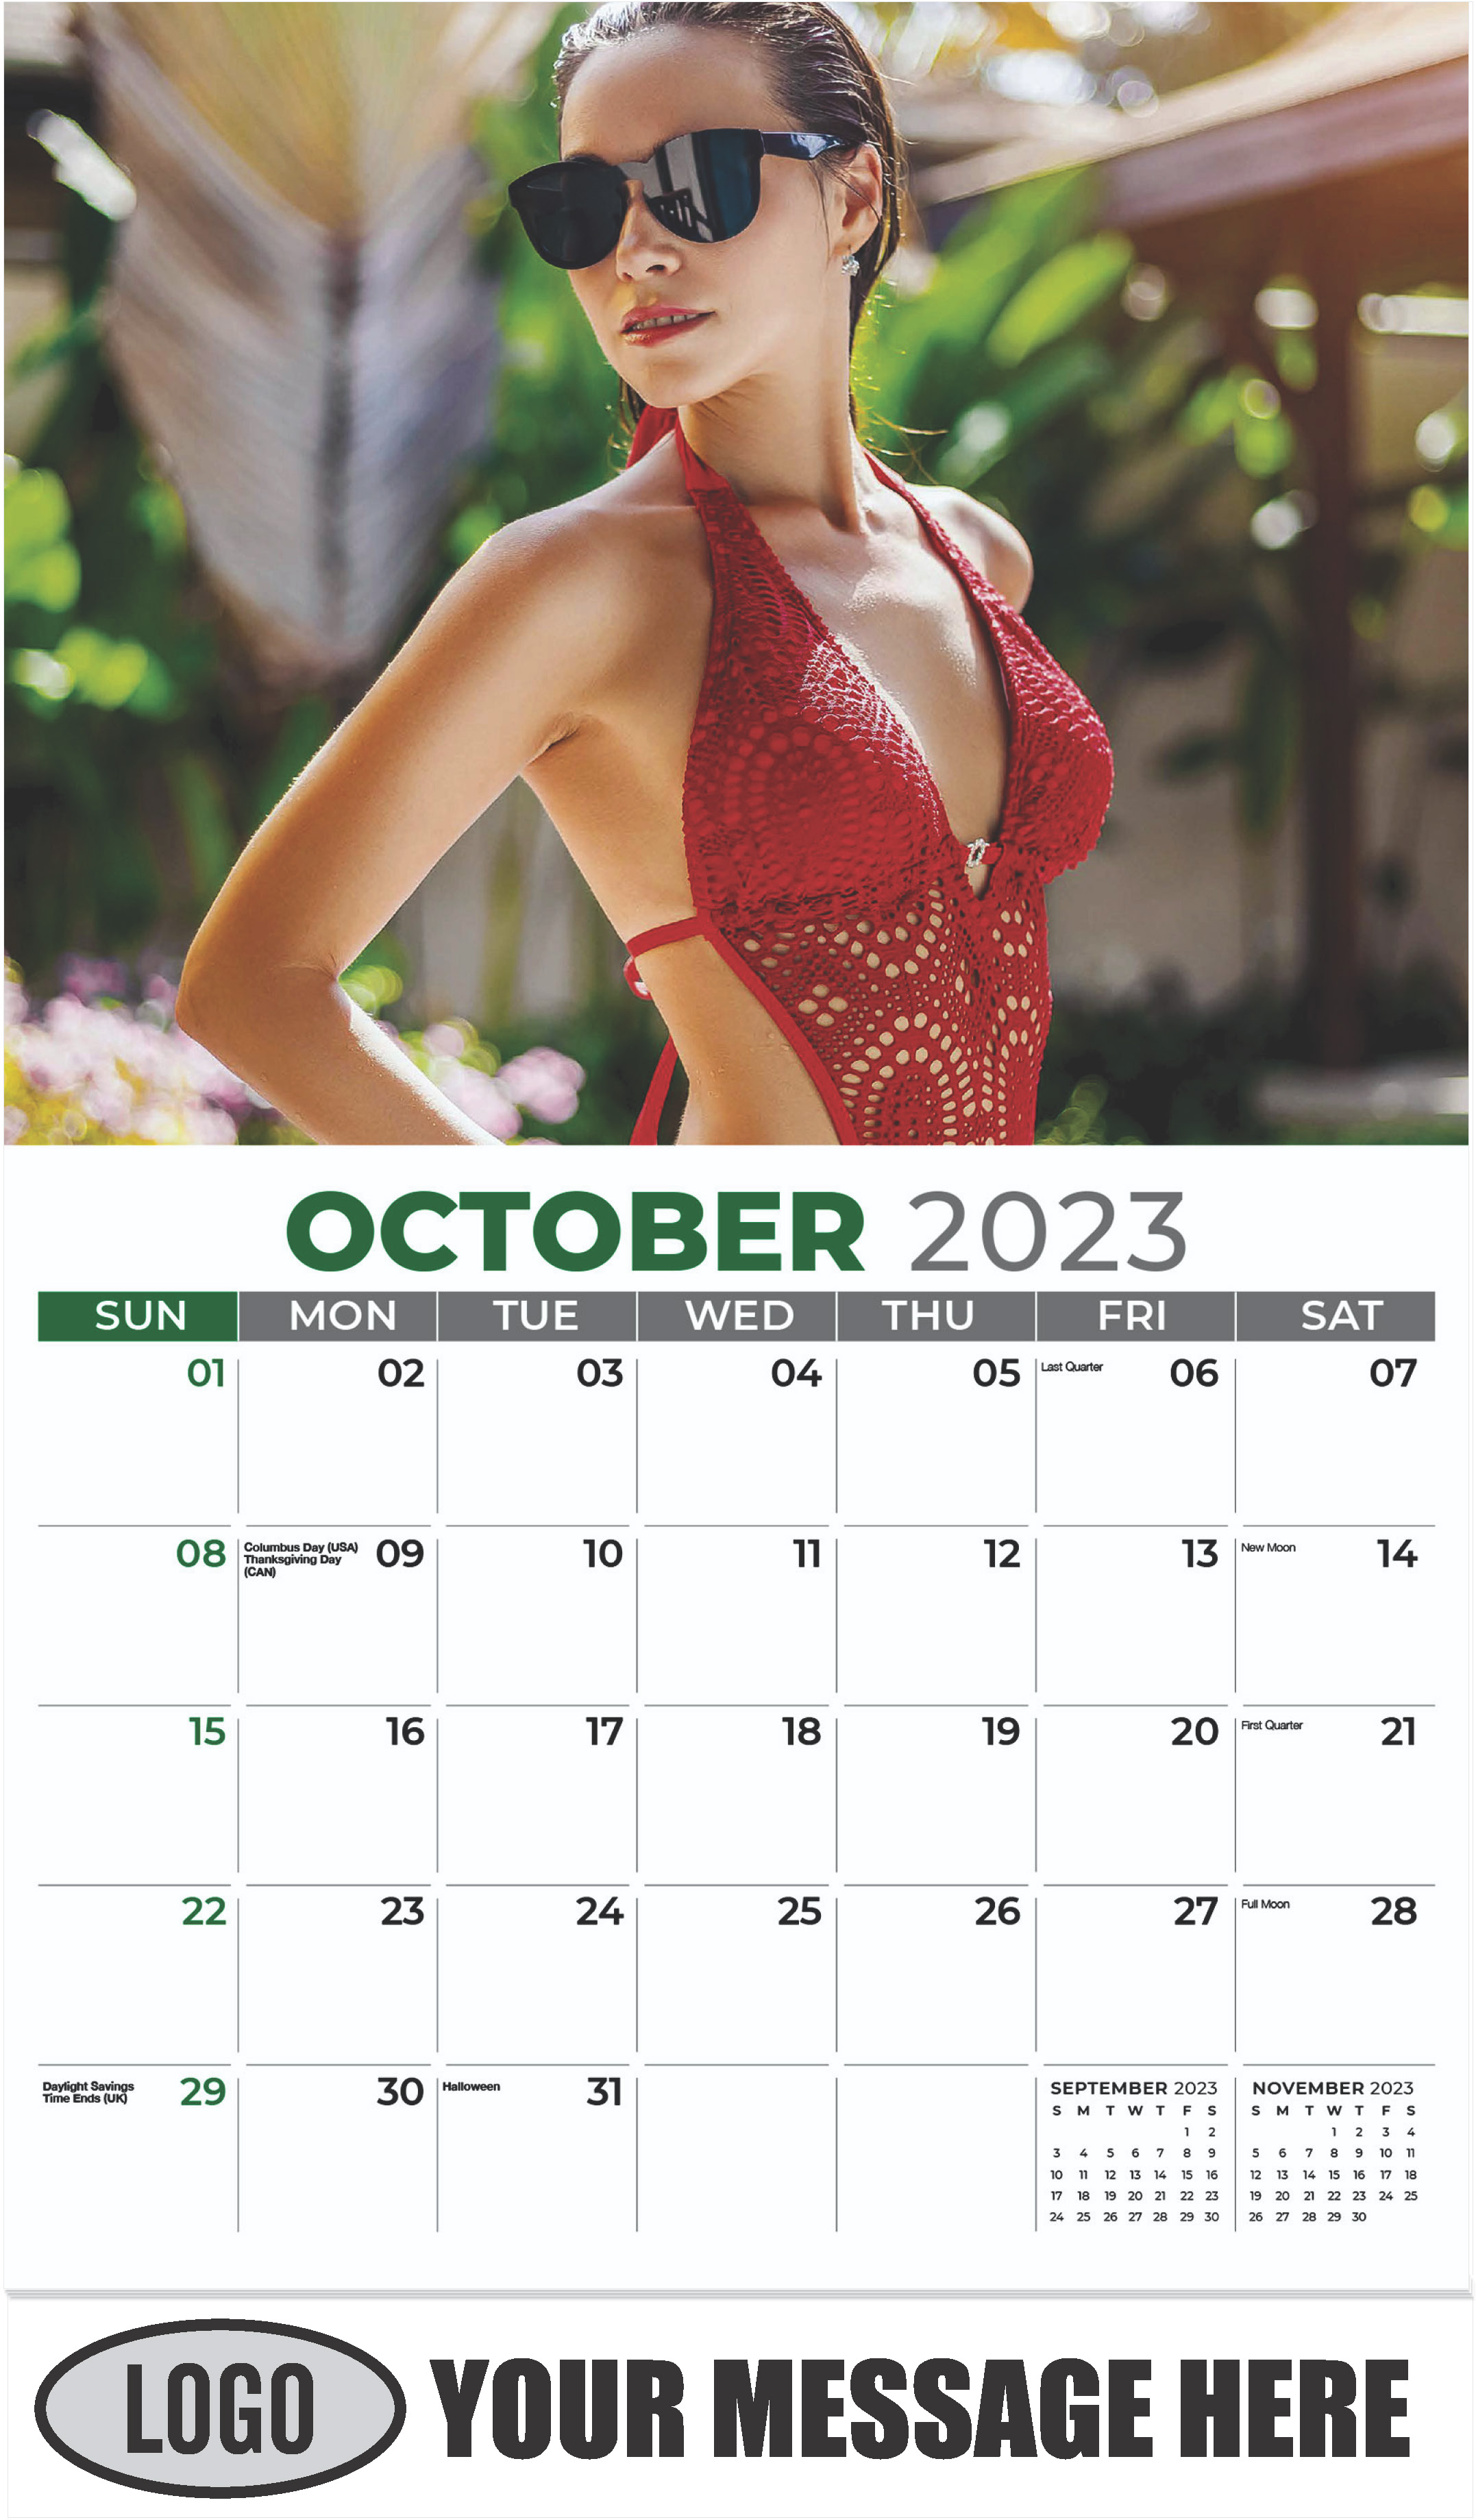 Bikini Models Calendar - October - Swimsuits 2023 Promotional Calendar